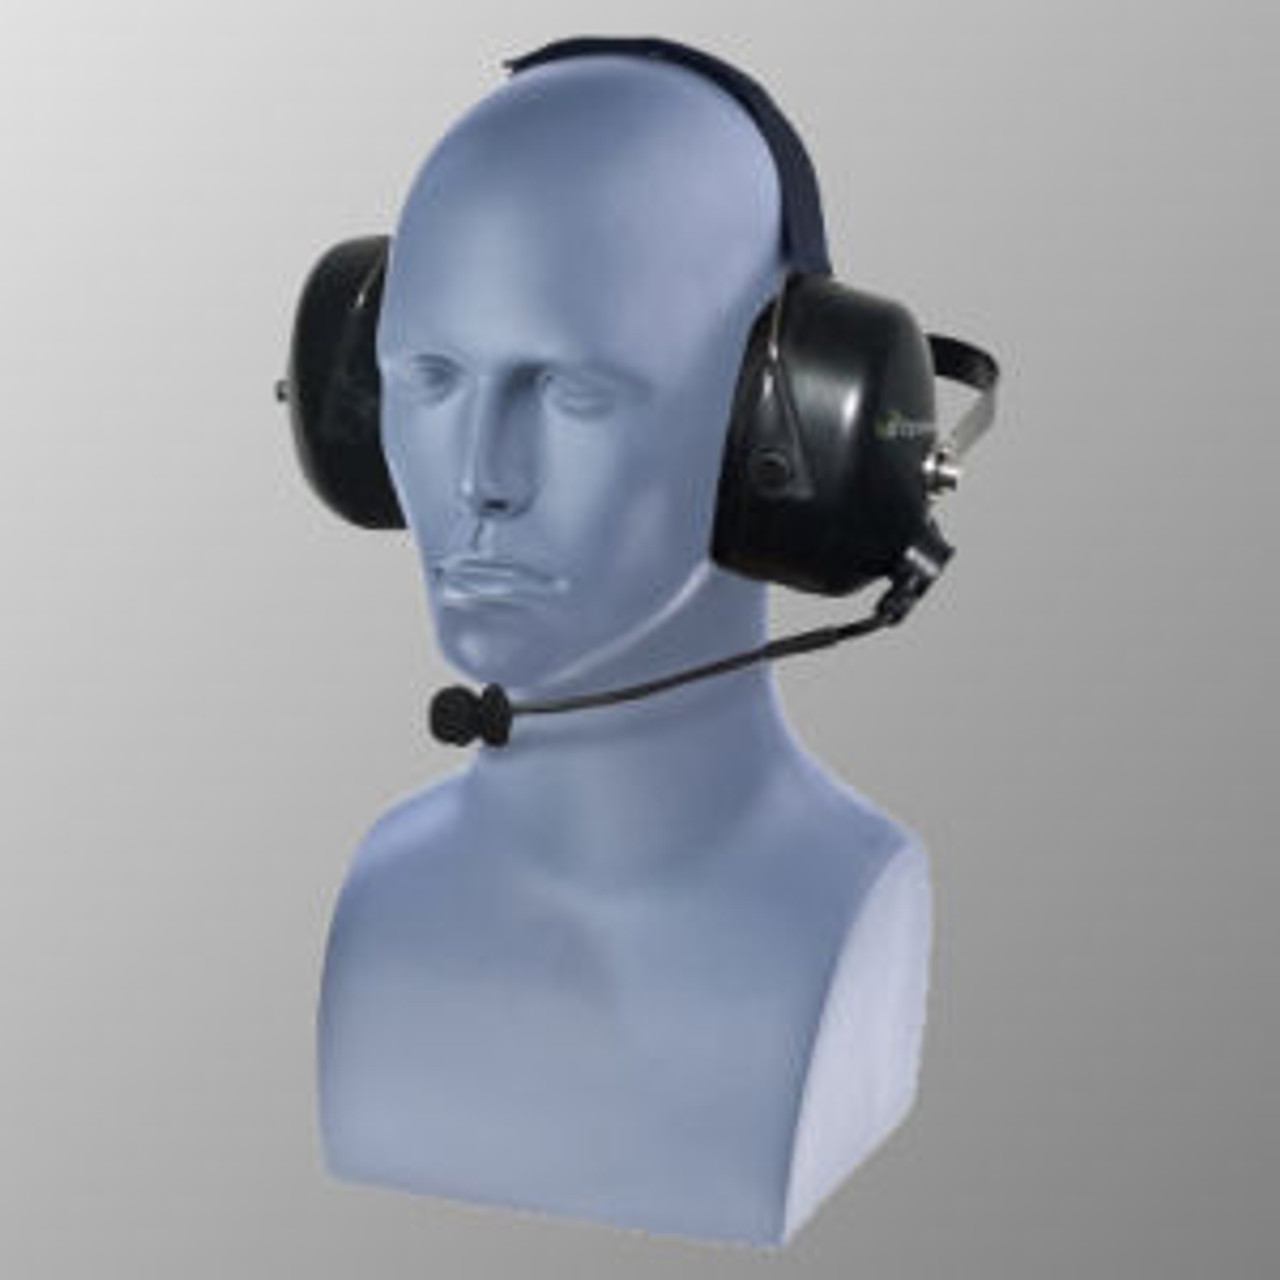 ICOM IC-F4021 Noise Canceling Double Muff Behind The Head Headset